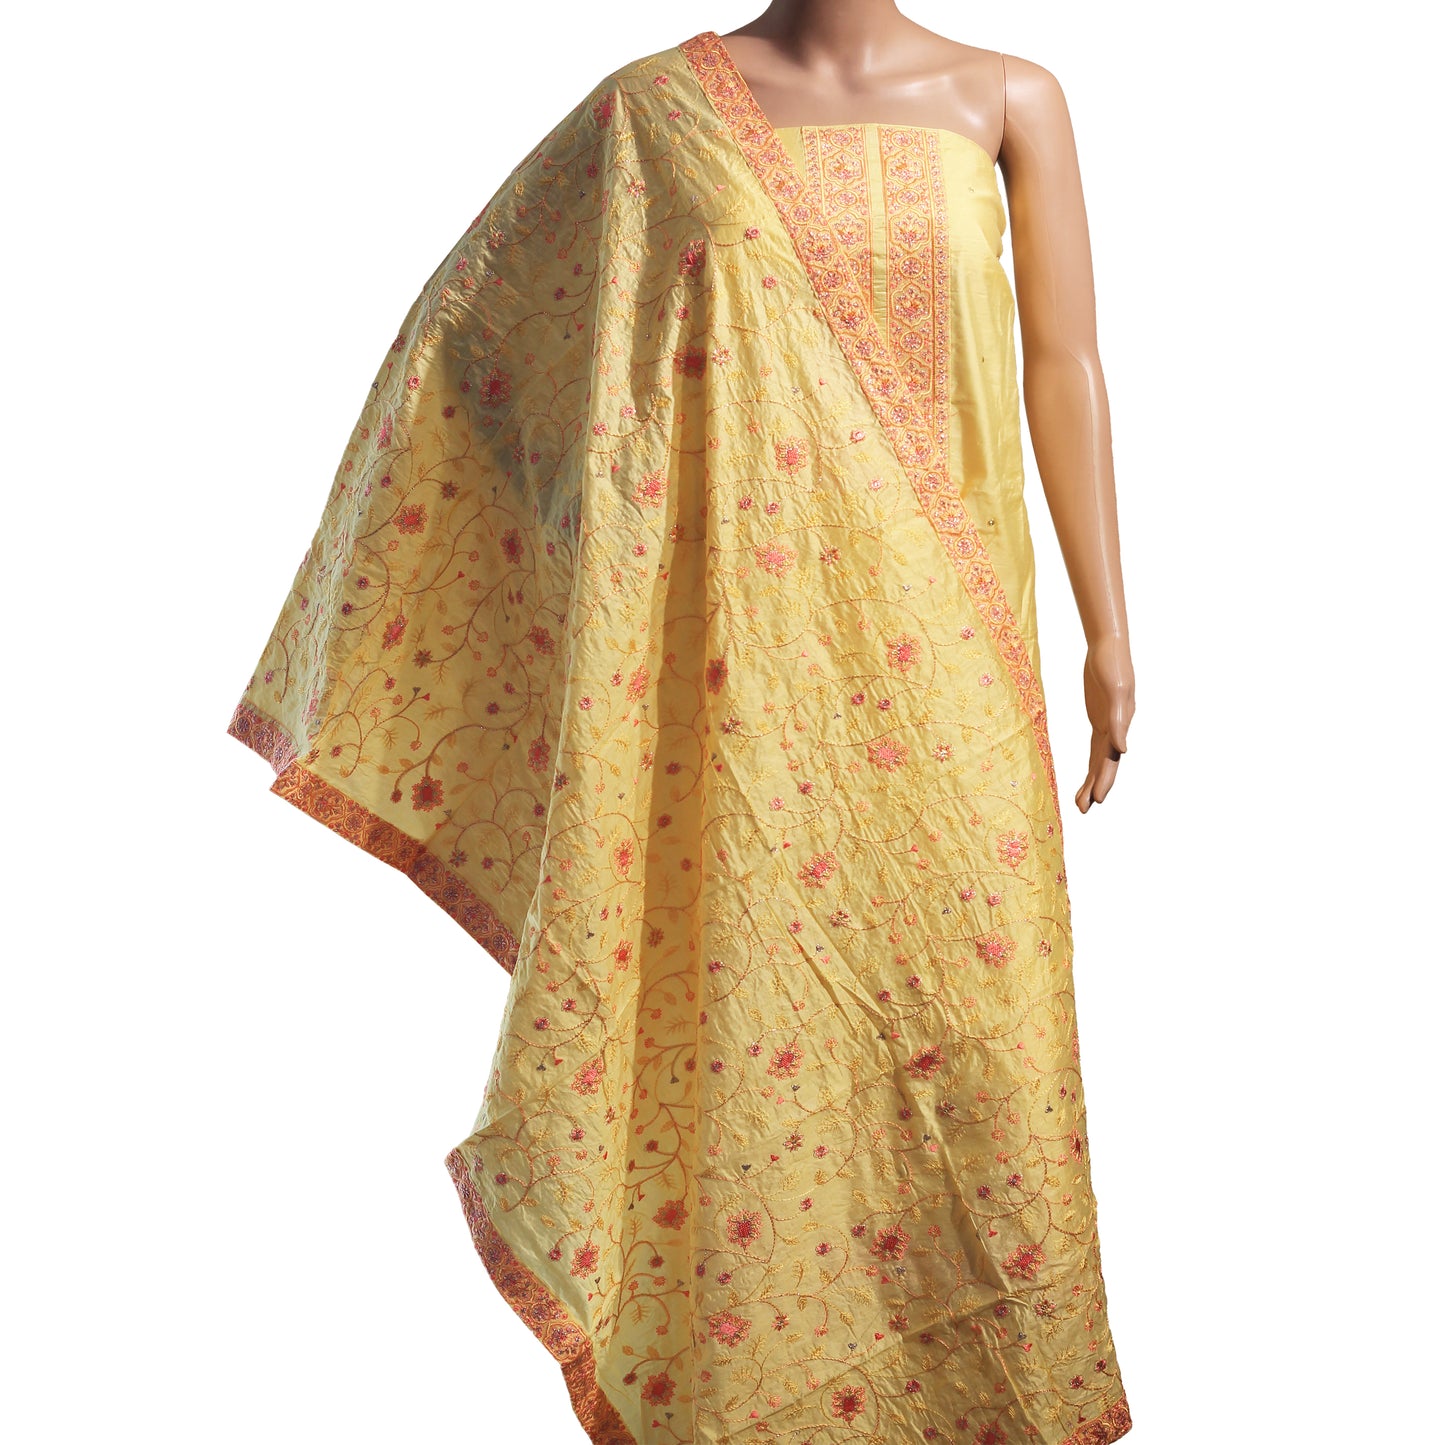 Yellow Silk Dress Material